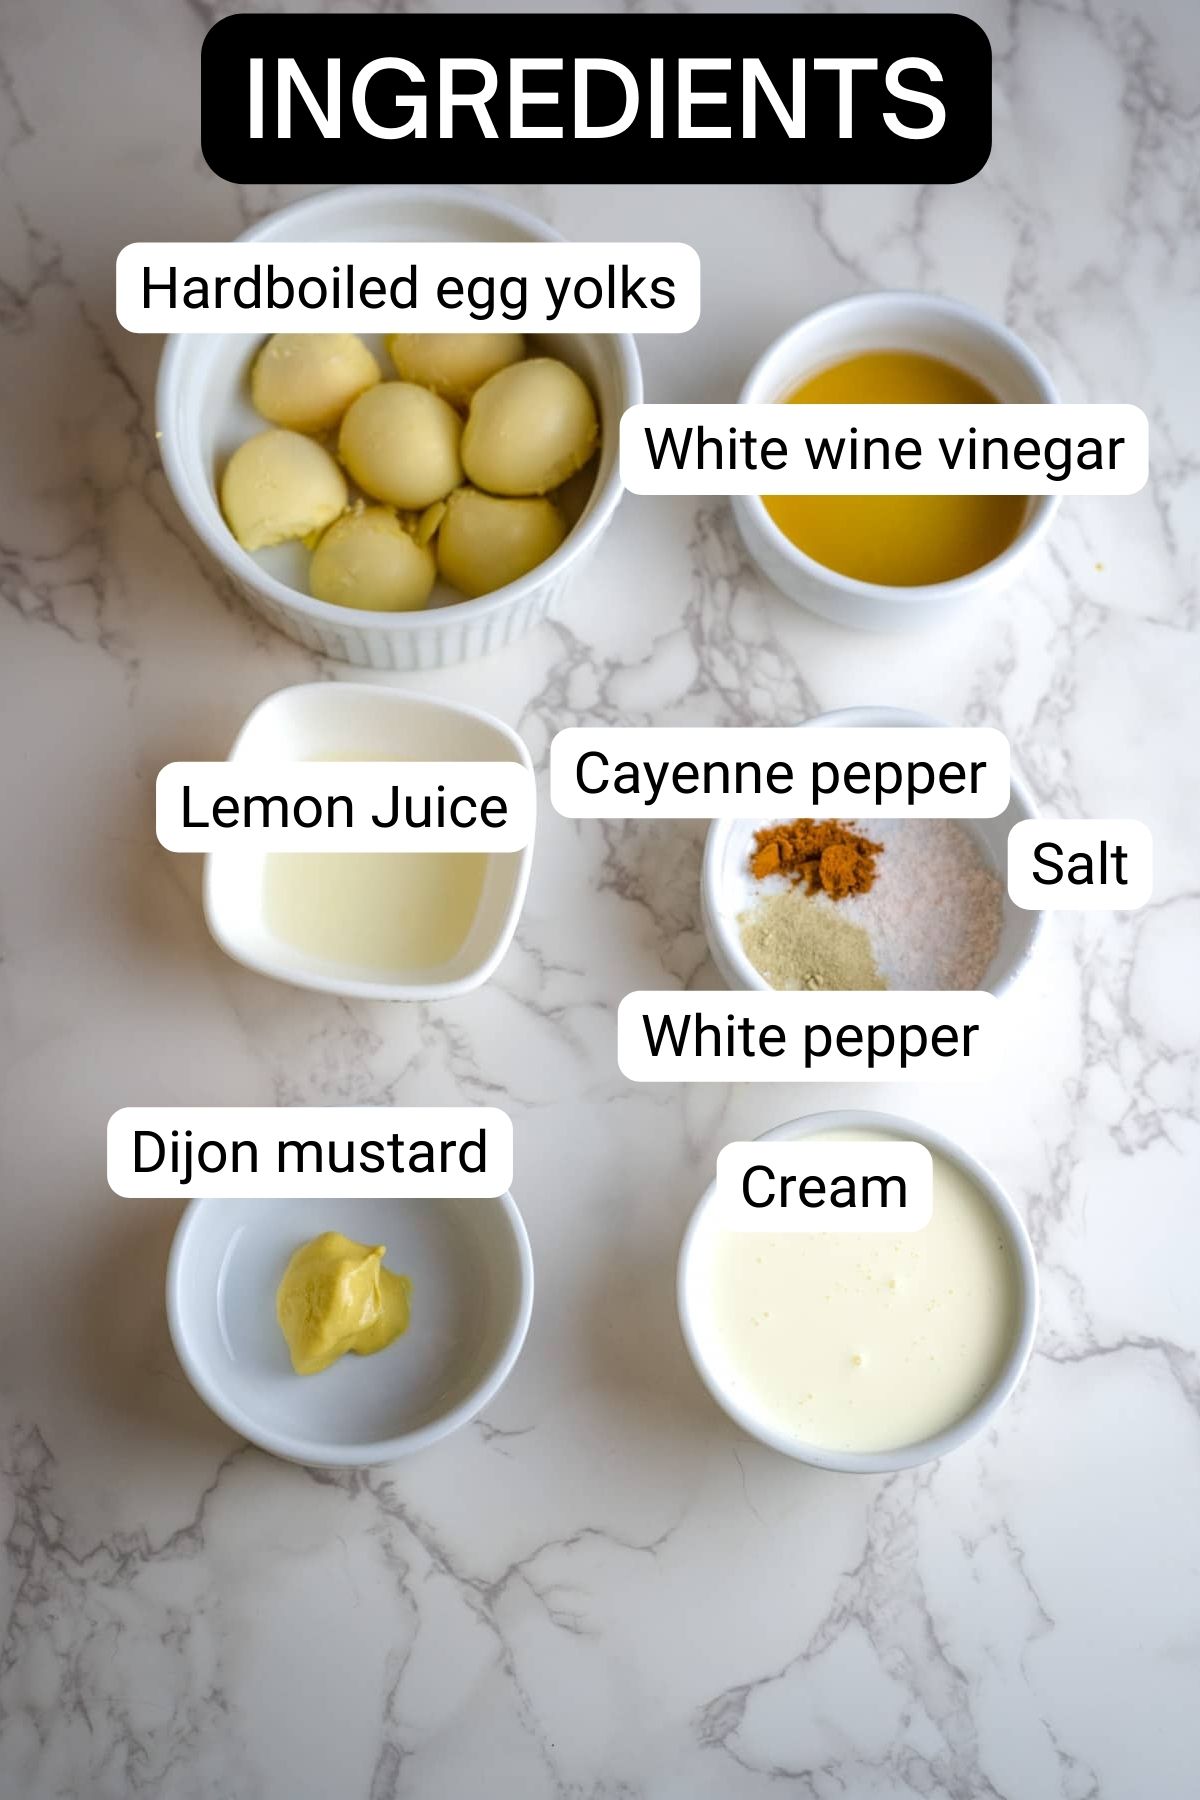 salad cream ingredients